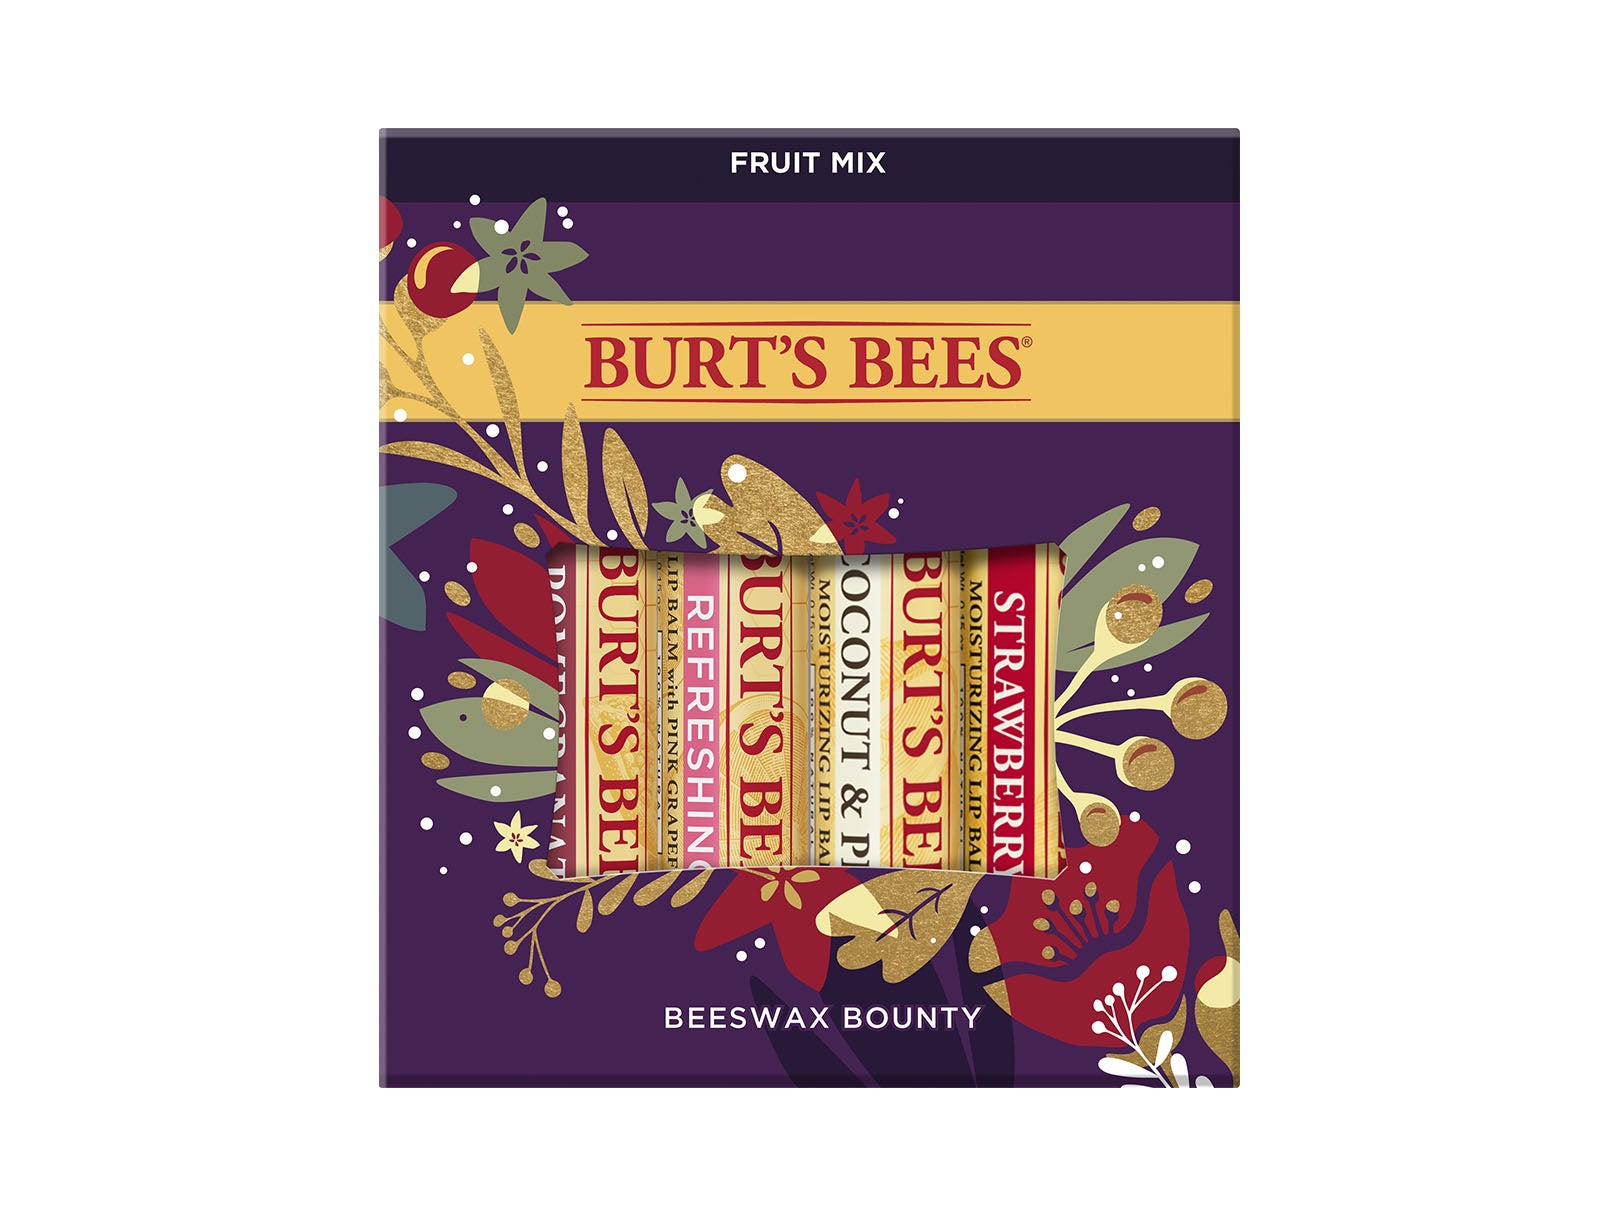 Burt’s Bees Beeswax Bounty Fruit Mix Gift